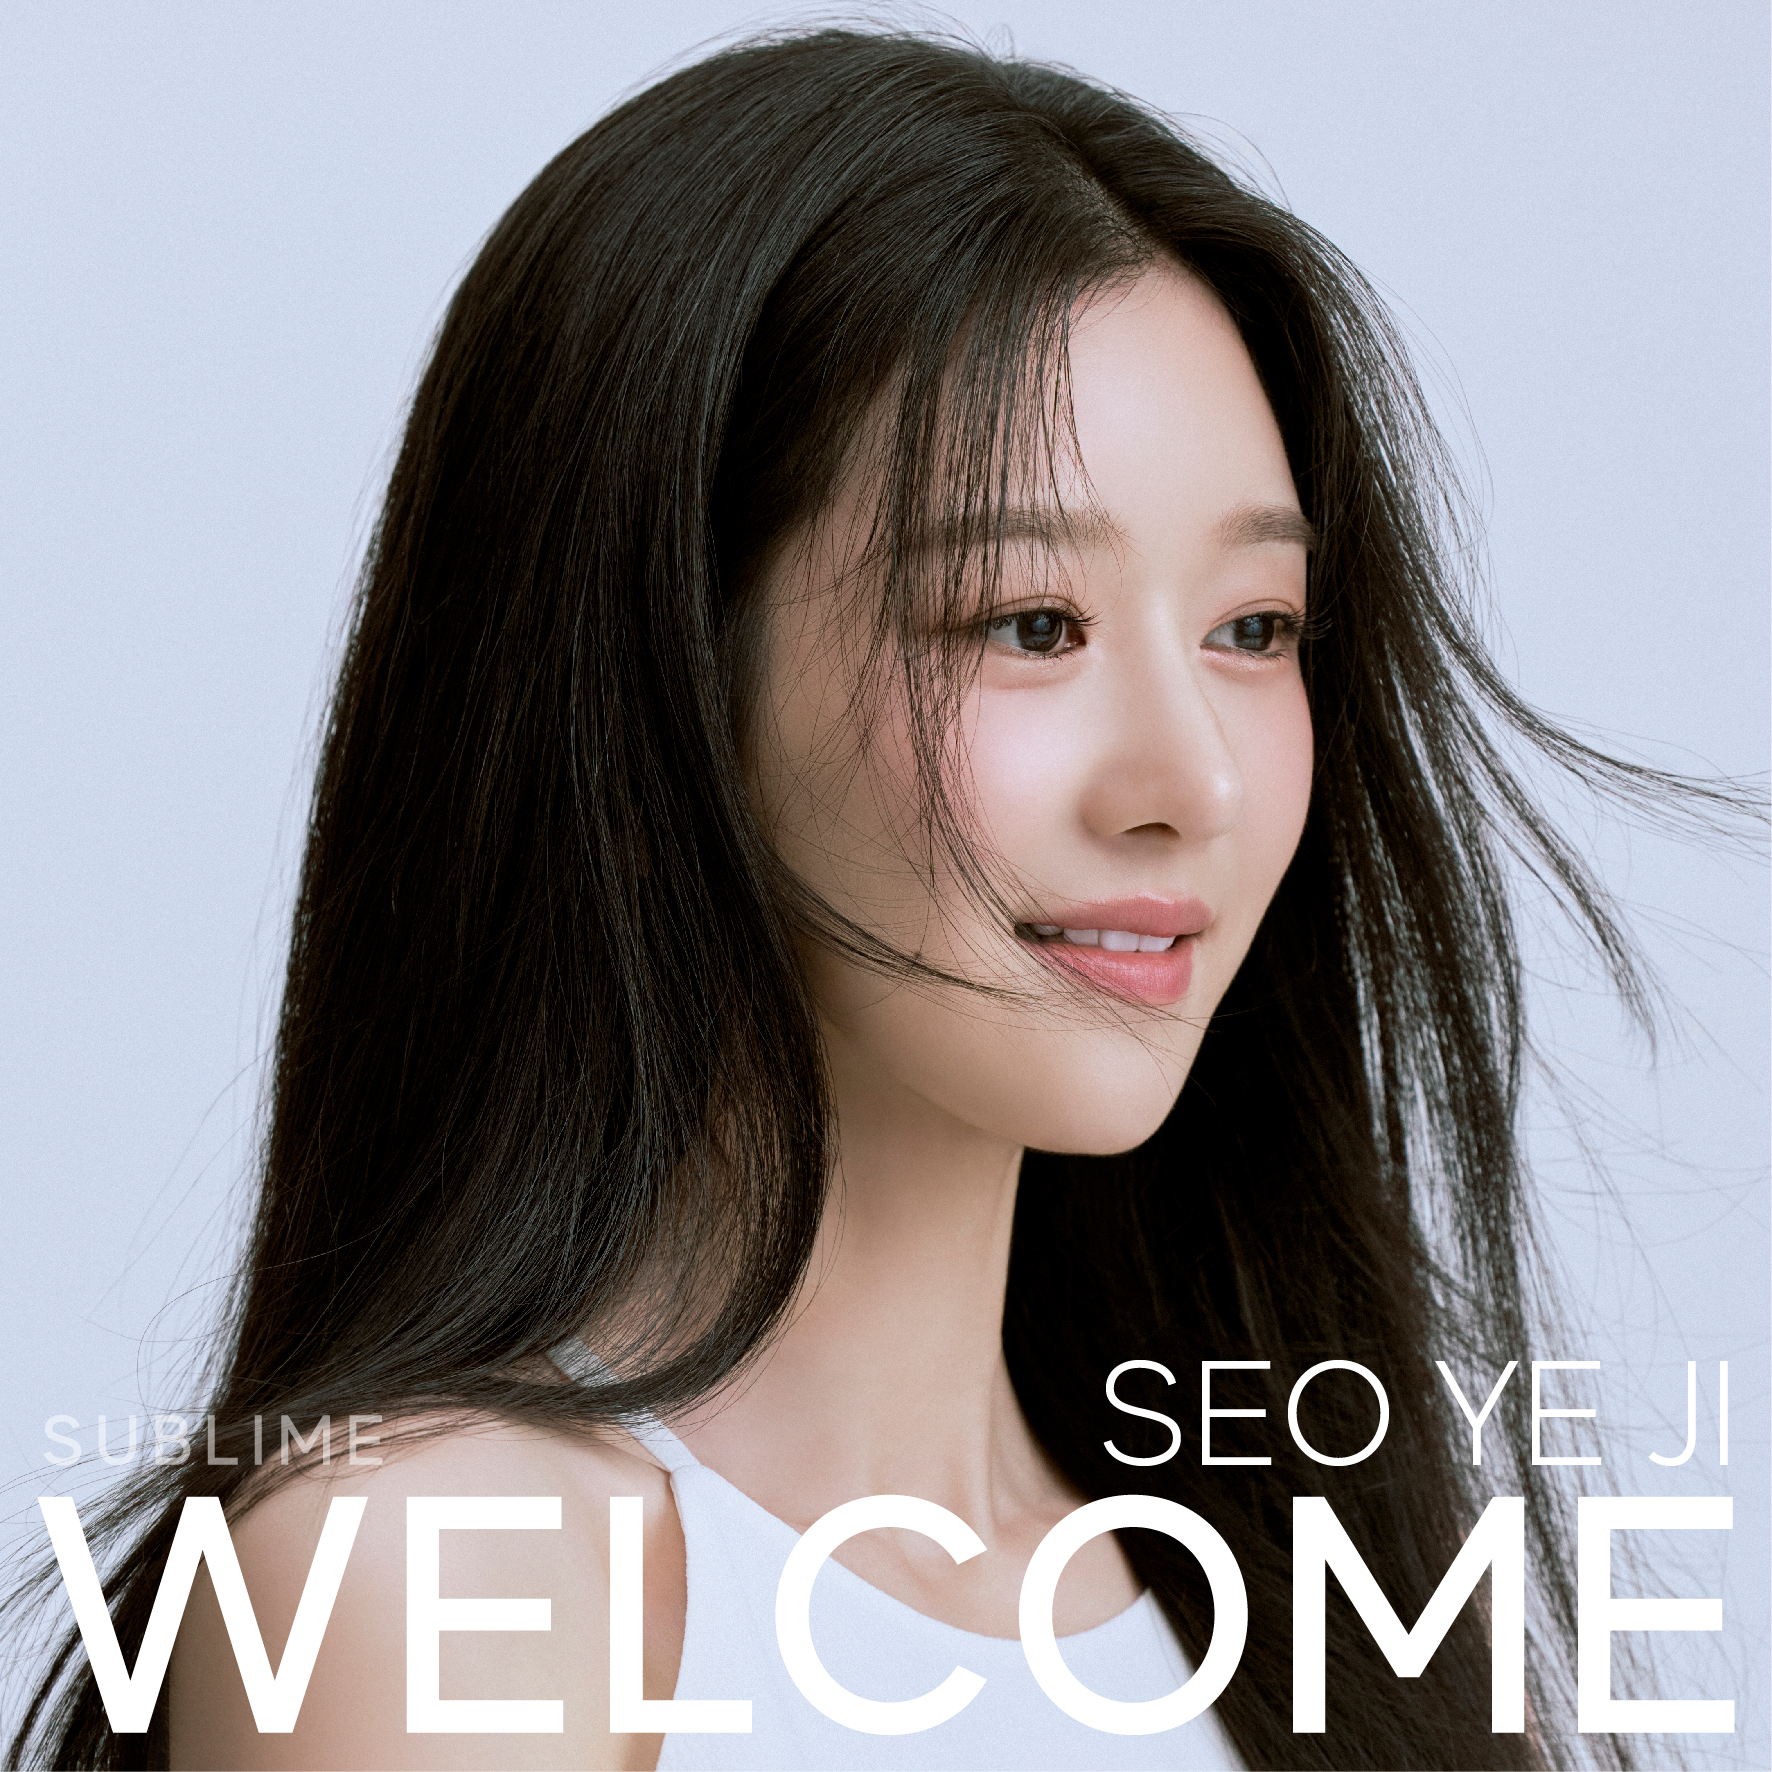 Seo Ye Ji Signs With New Agency